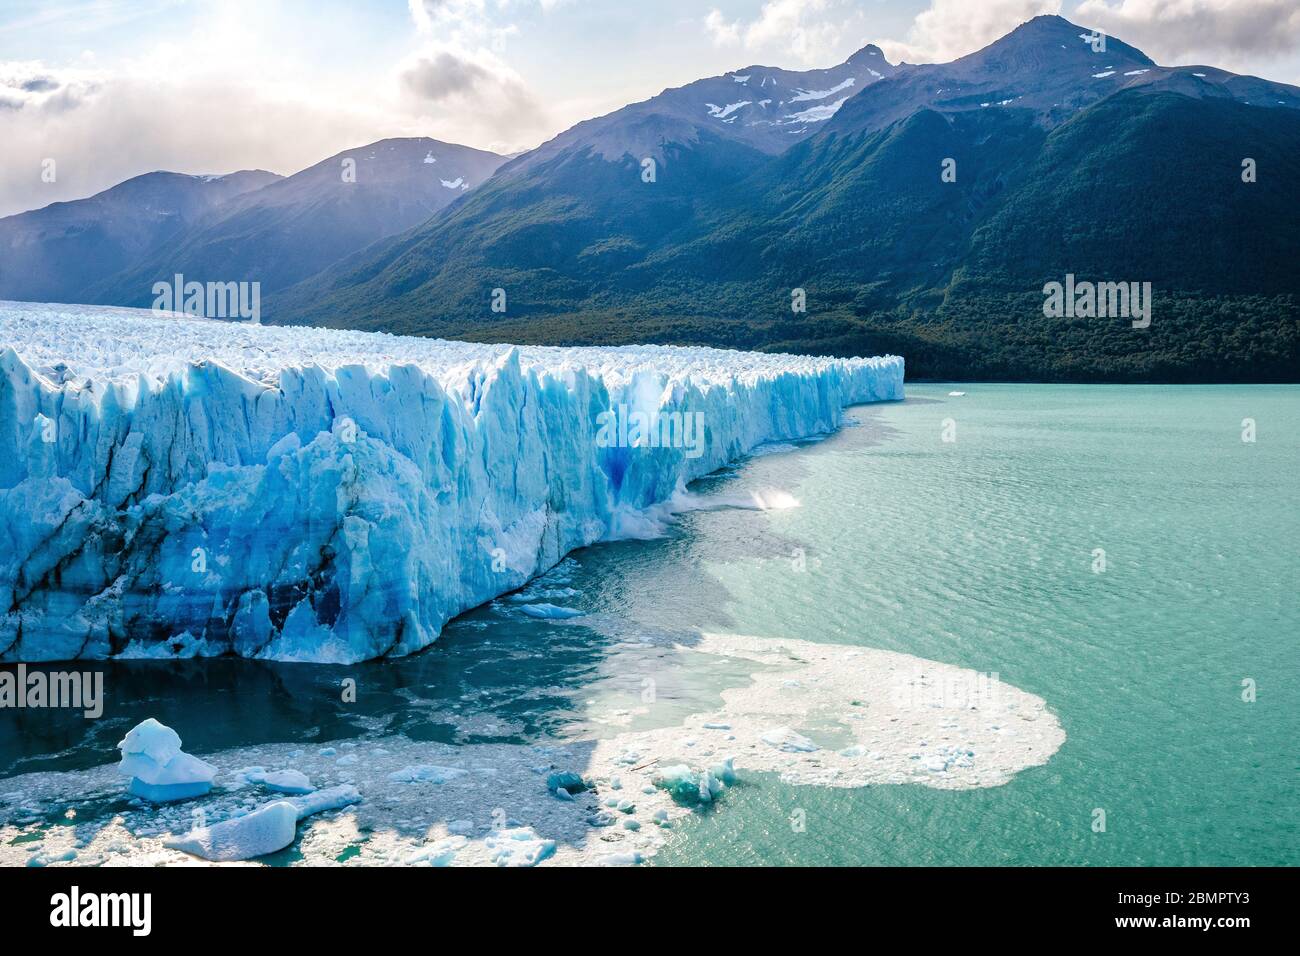 Ice collapsing into the water at Perito Moreno Glacier in Los Glaciares National Park near El Calafate, Patagonia Argentina, South America. Stock Photo